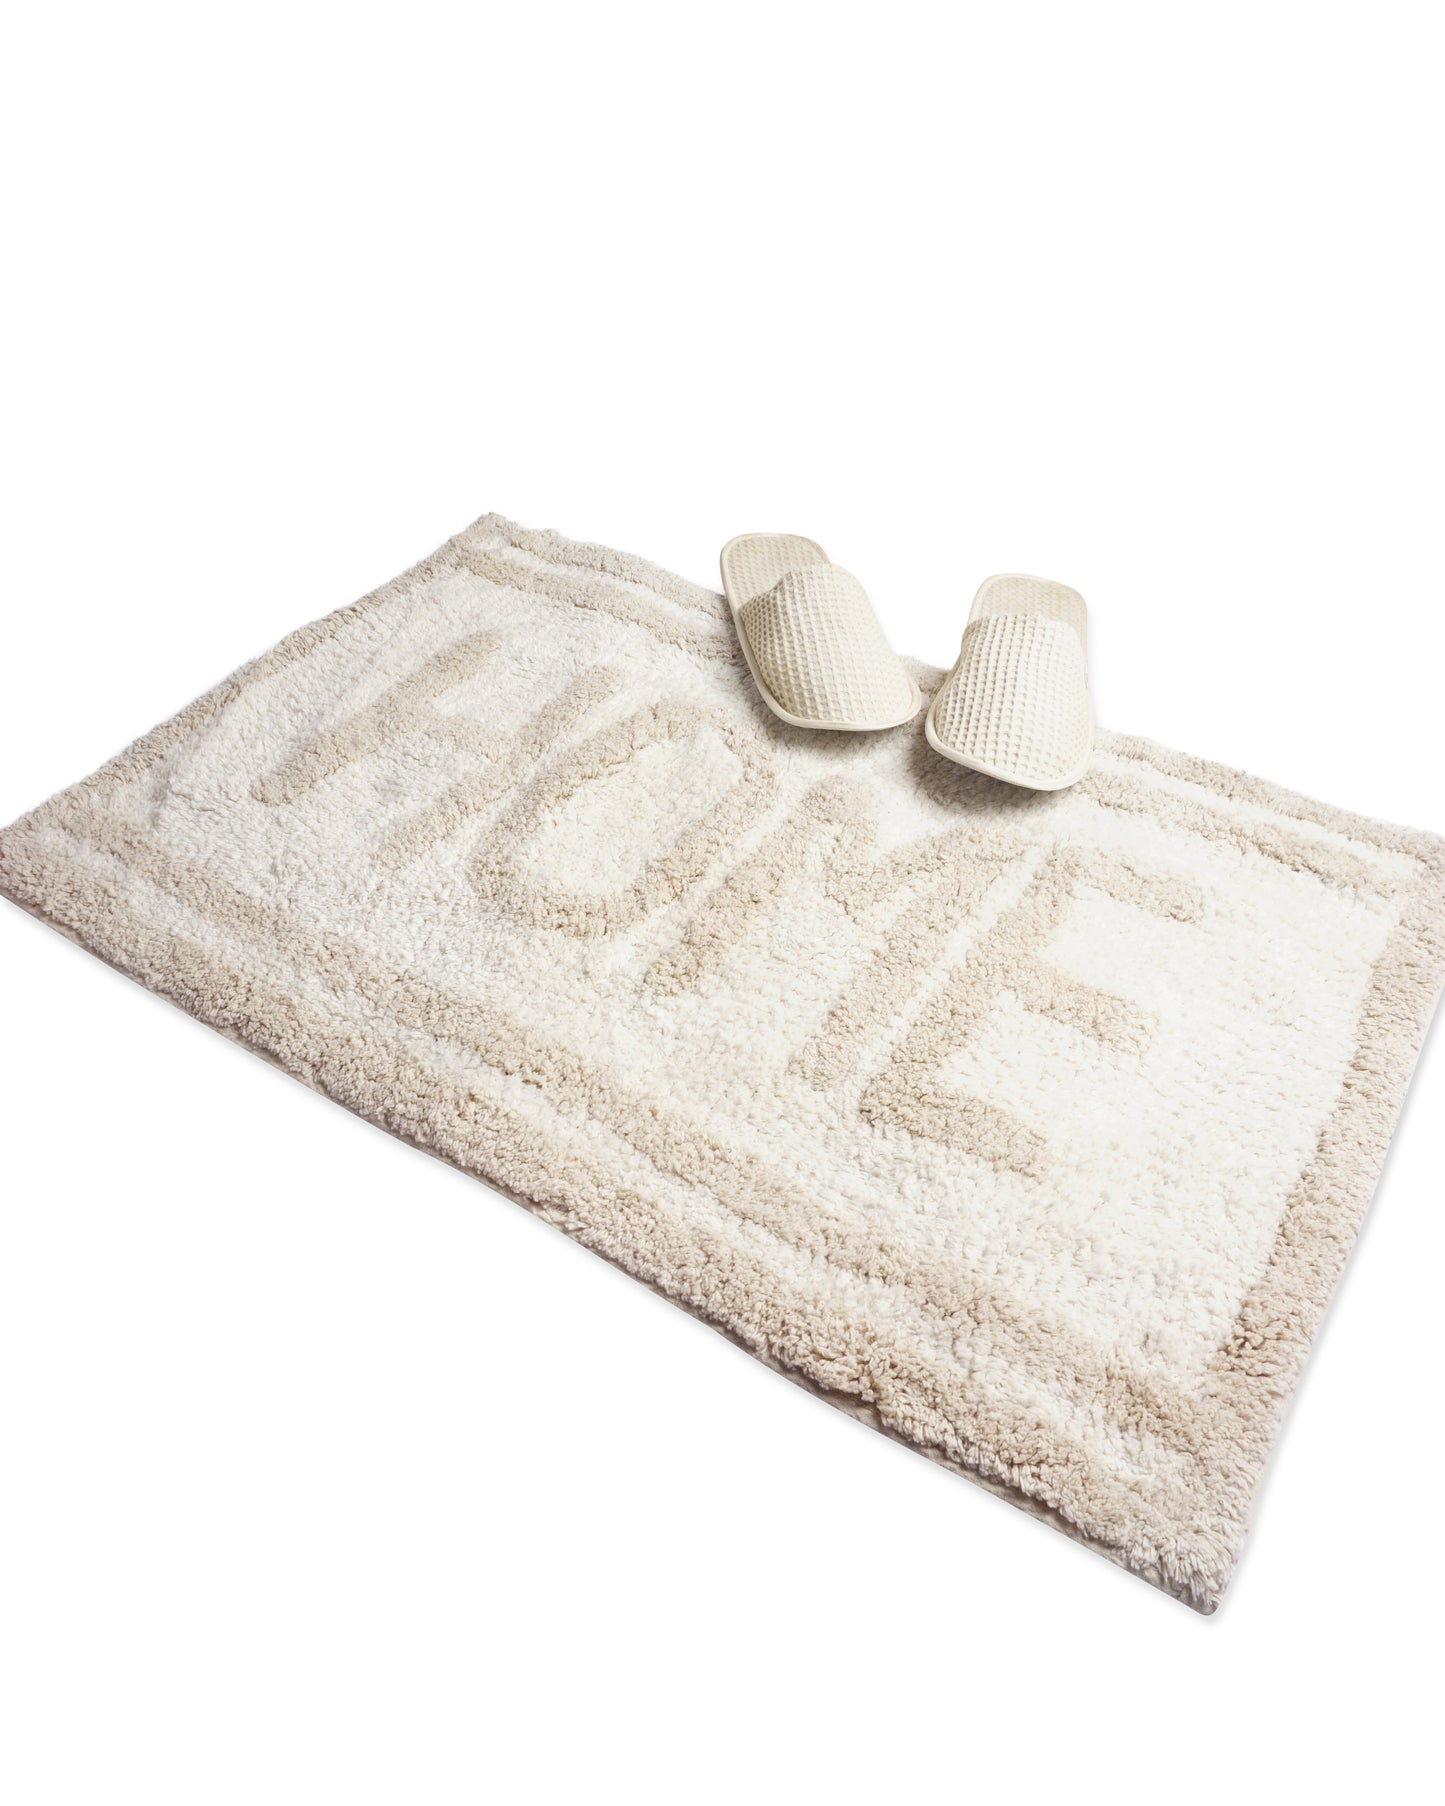 Quirky slogan bath/door mat : Home